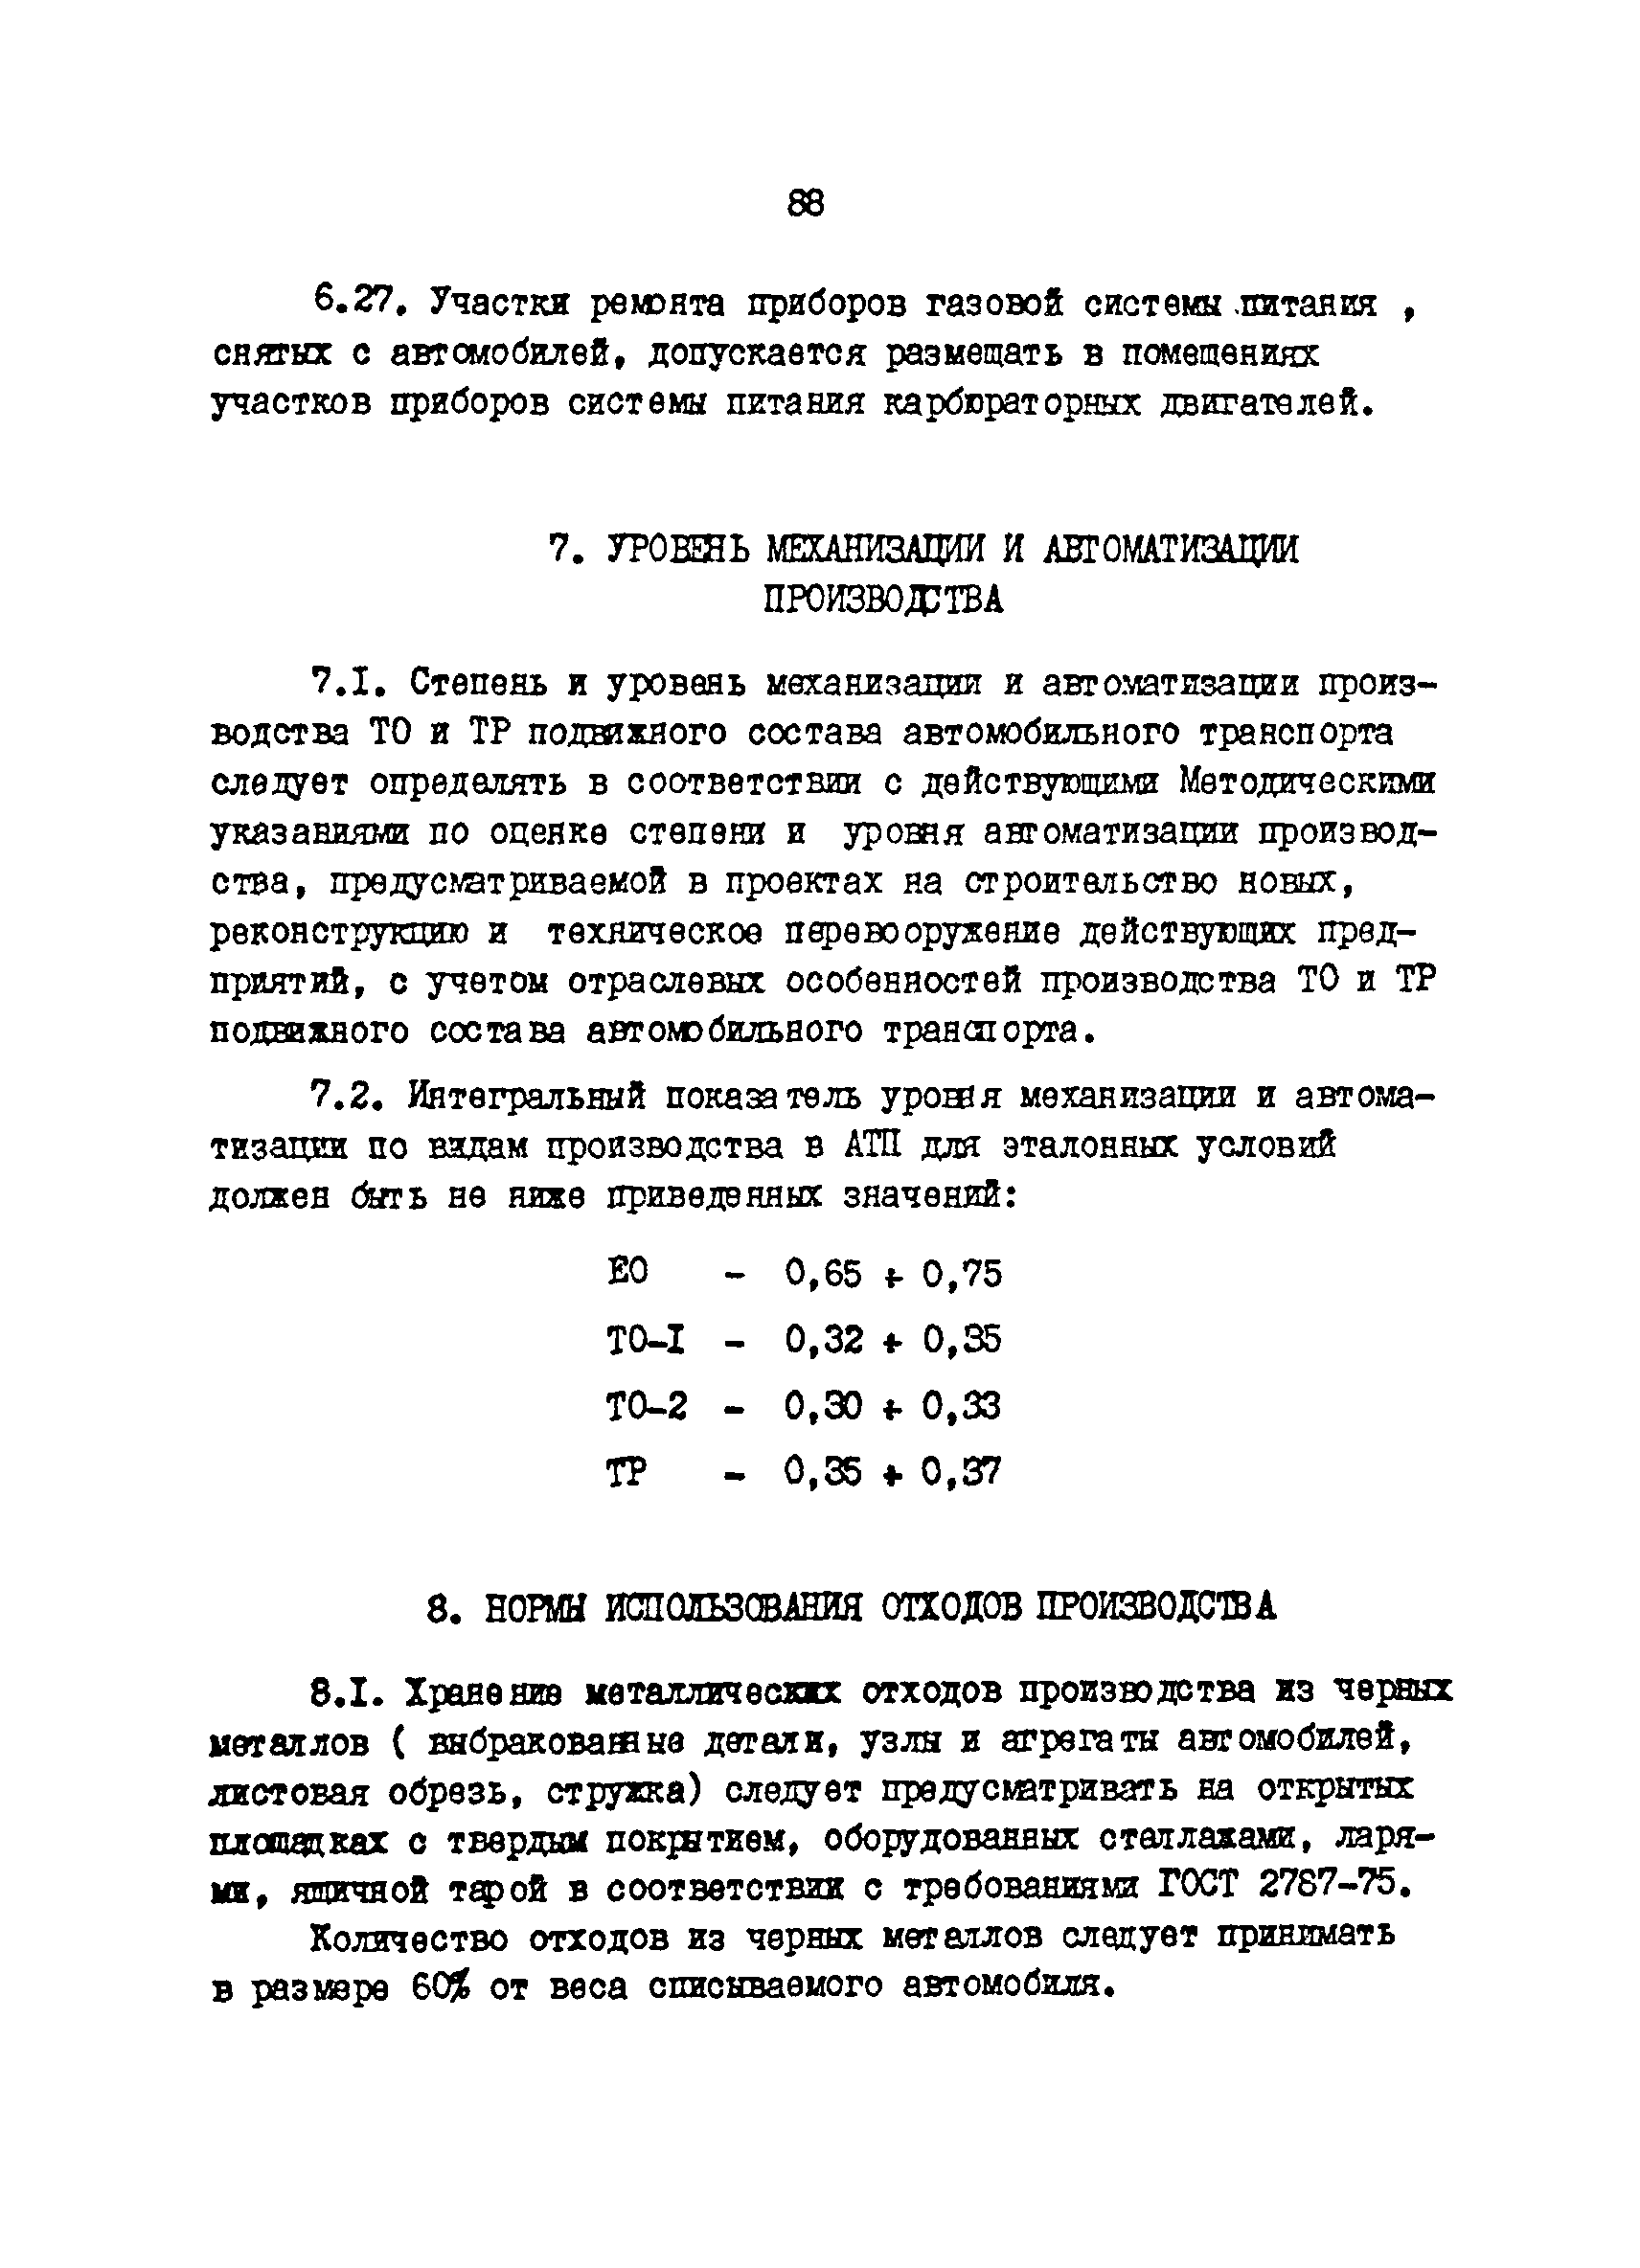 ОНТП 01-86/Минавтотранс РСФСР